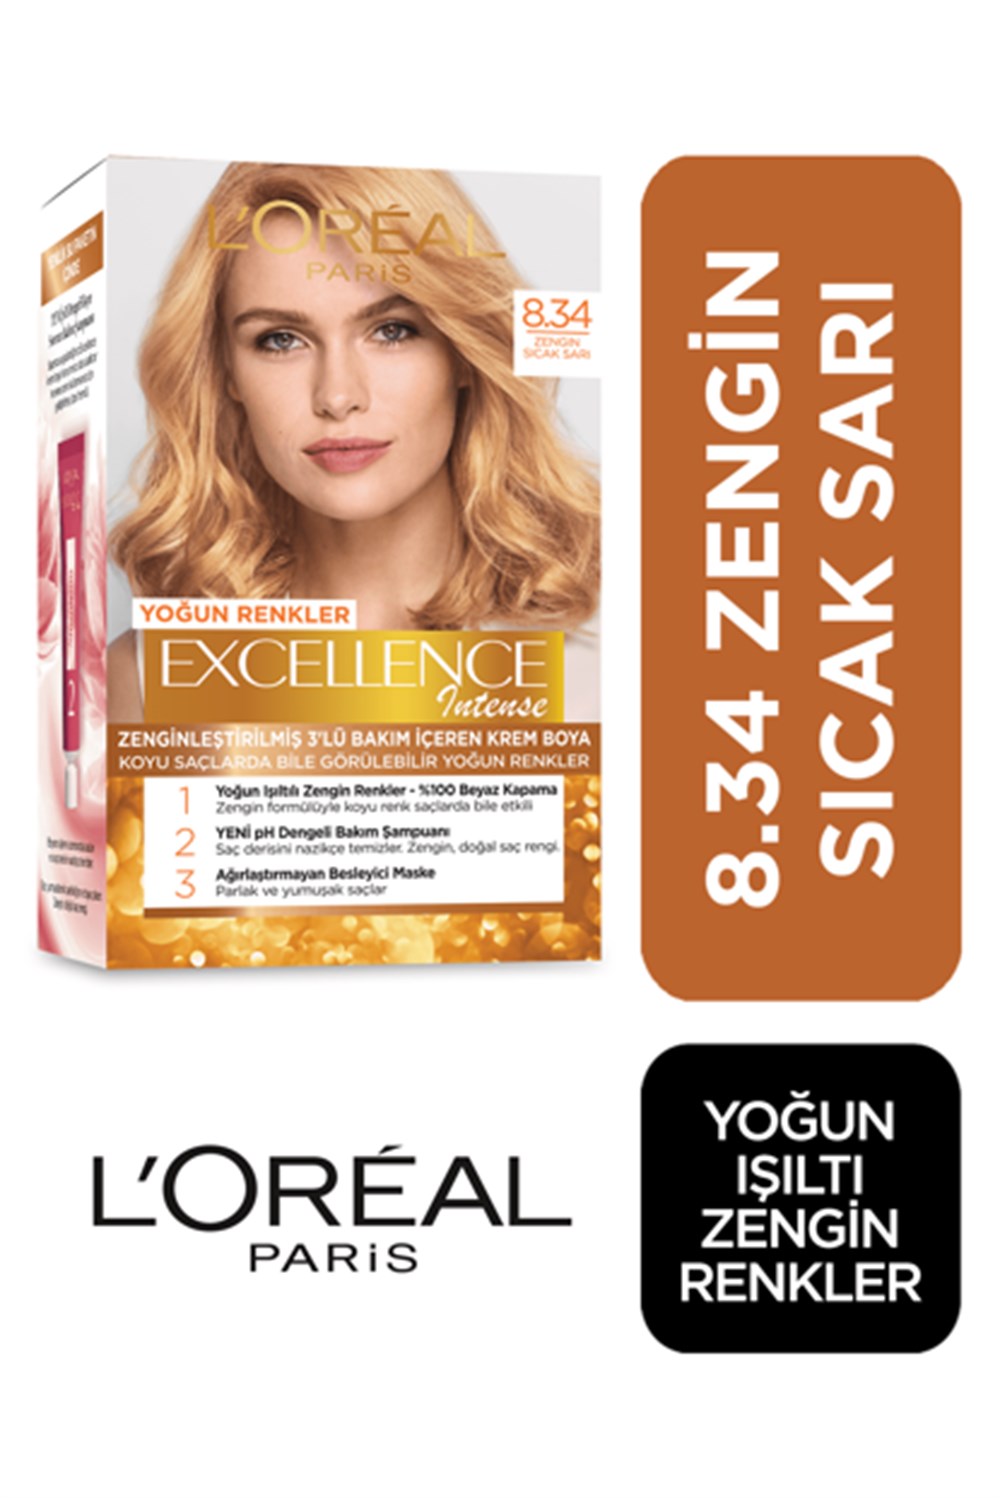 Loreal Paris Excellence Intense Saç Boyası 8.34 Zengin Sıcak Sarı | Cossta  Cosmetic Station